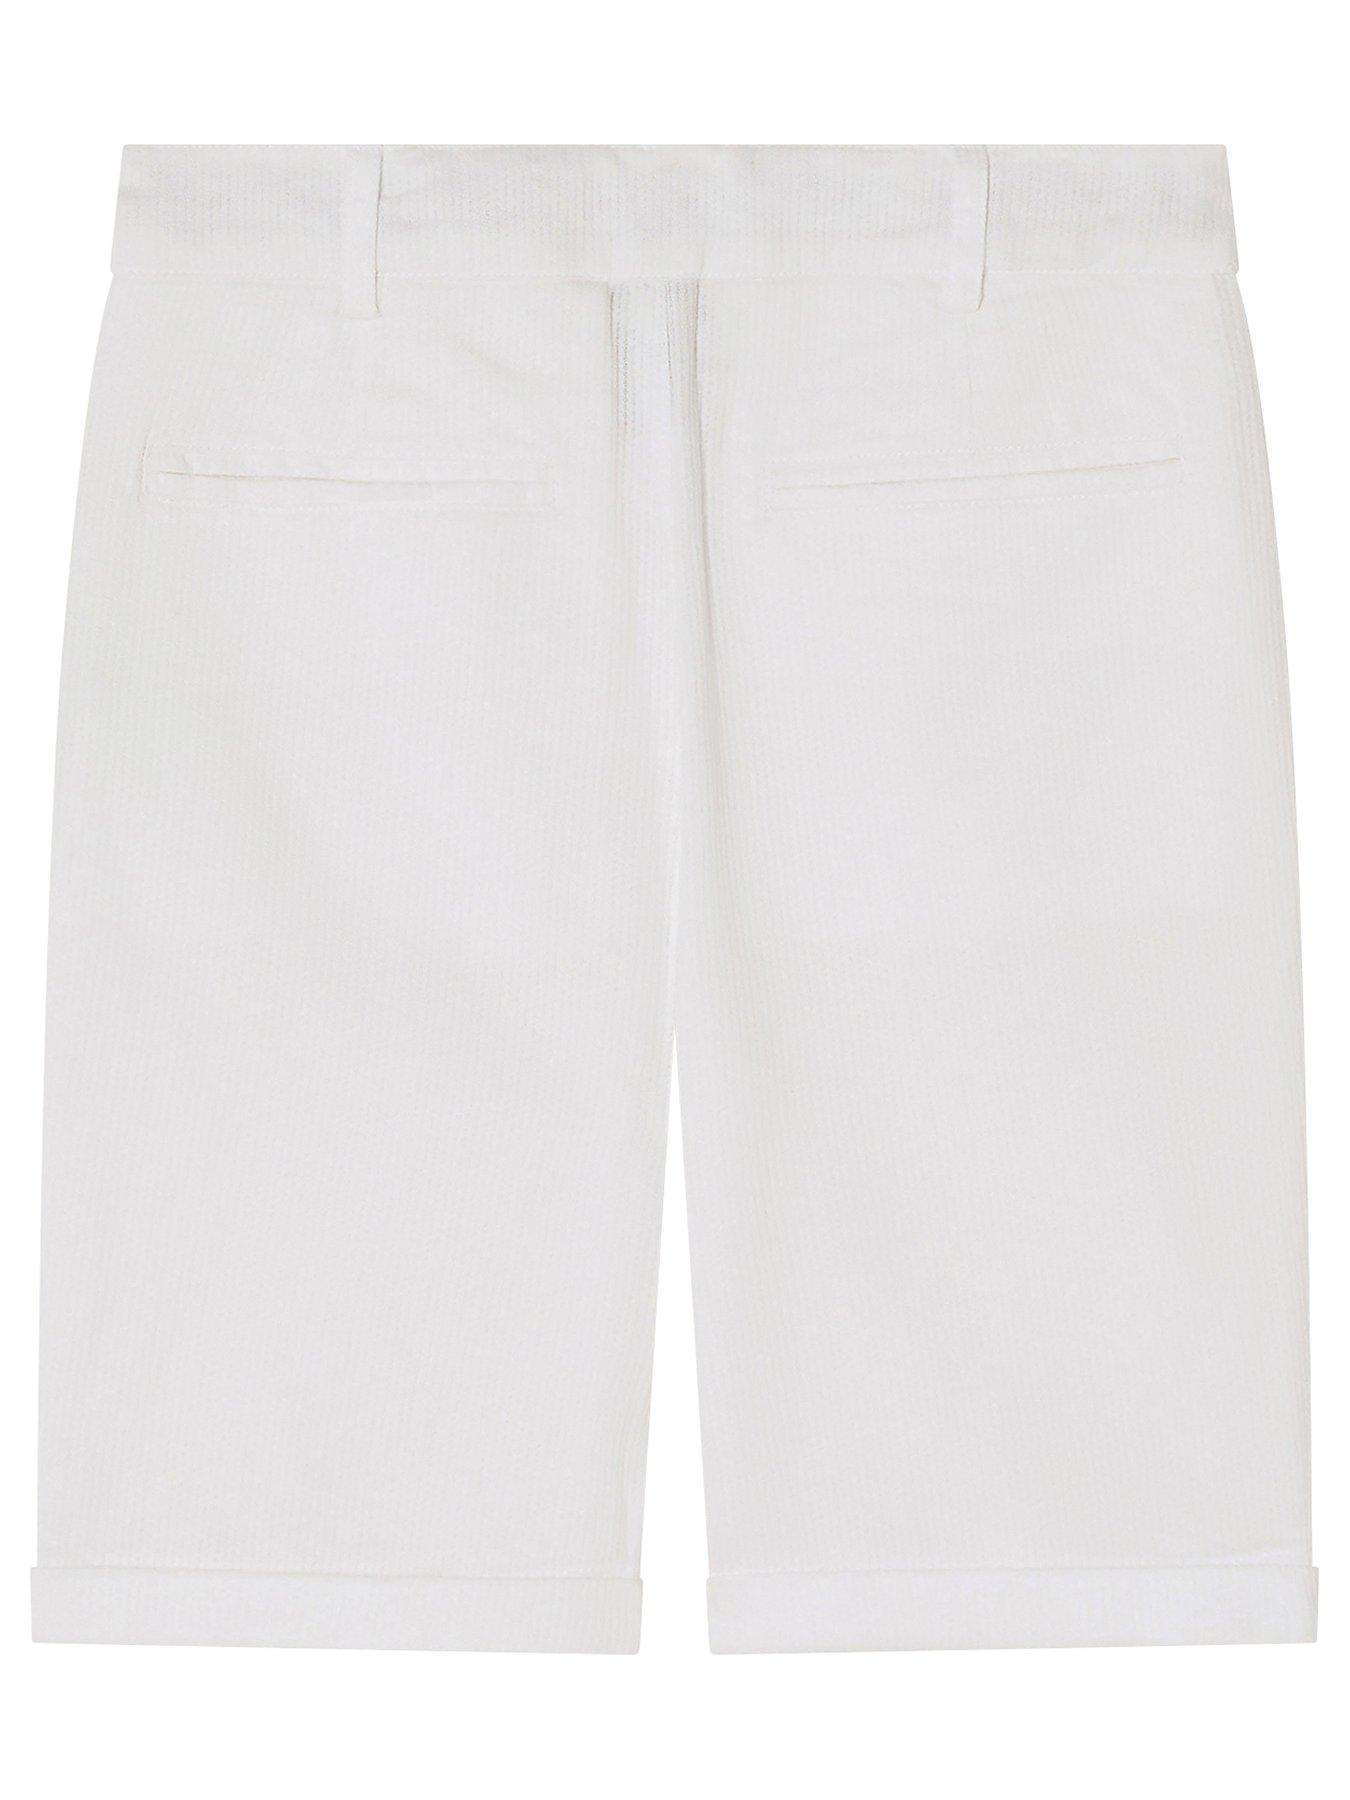 Boys Clothes Boys Smart Shorts - White